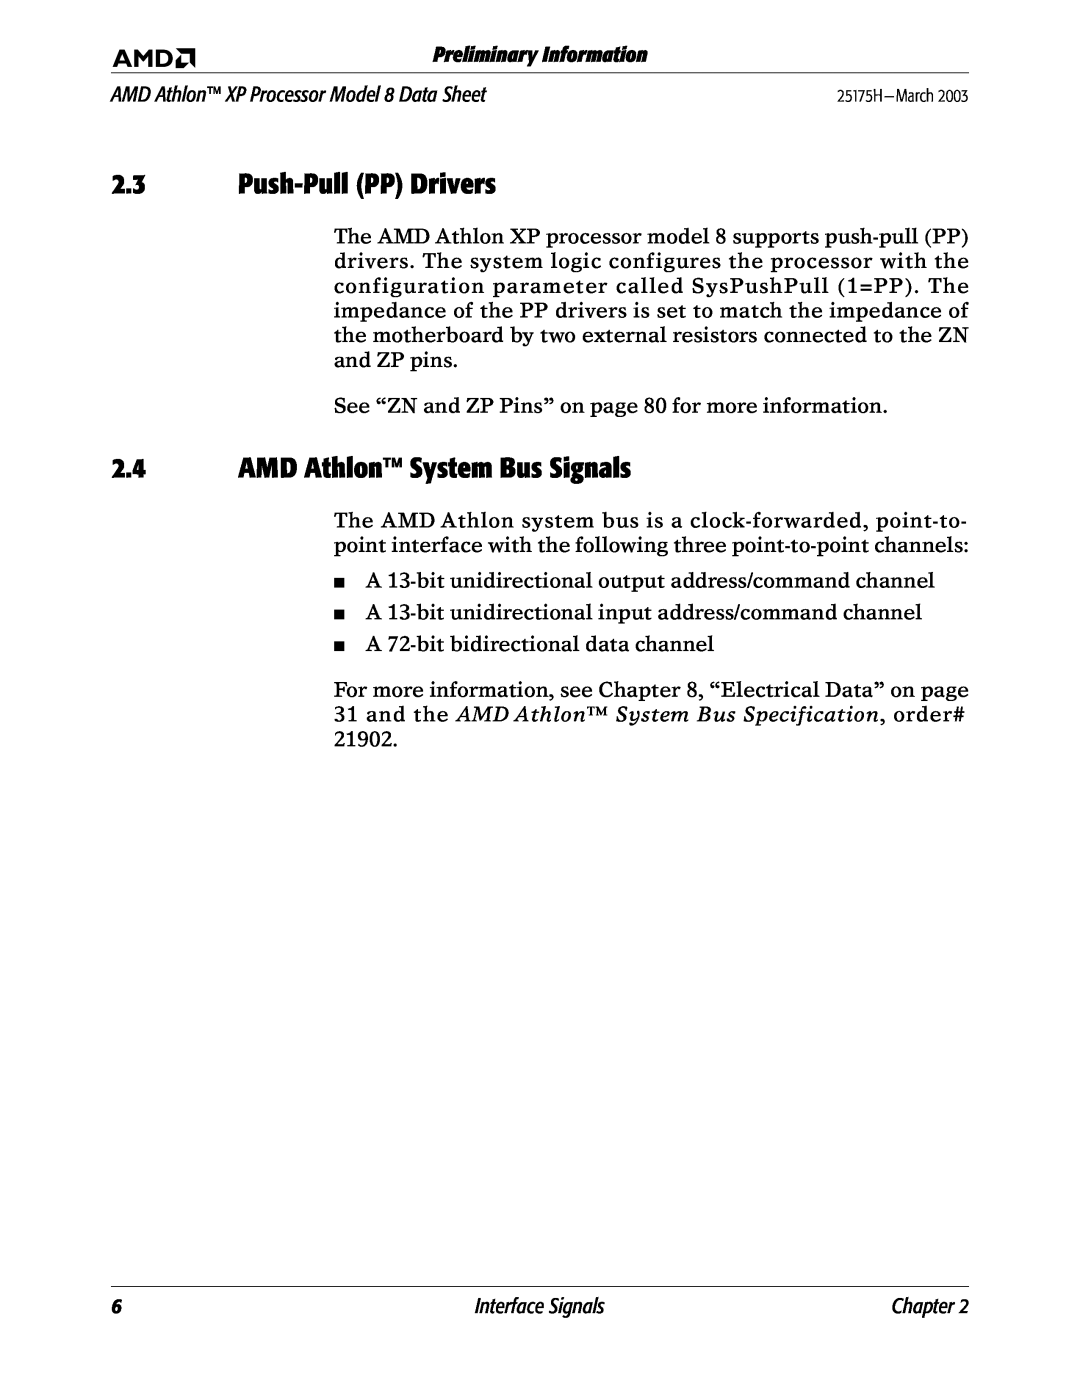 AMD 8 manual Push-Pull PP Drivers, AMD Athlon System Bus Signals, Preliminary Information, Interface Signals 